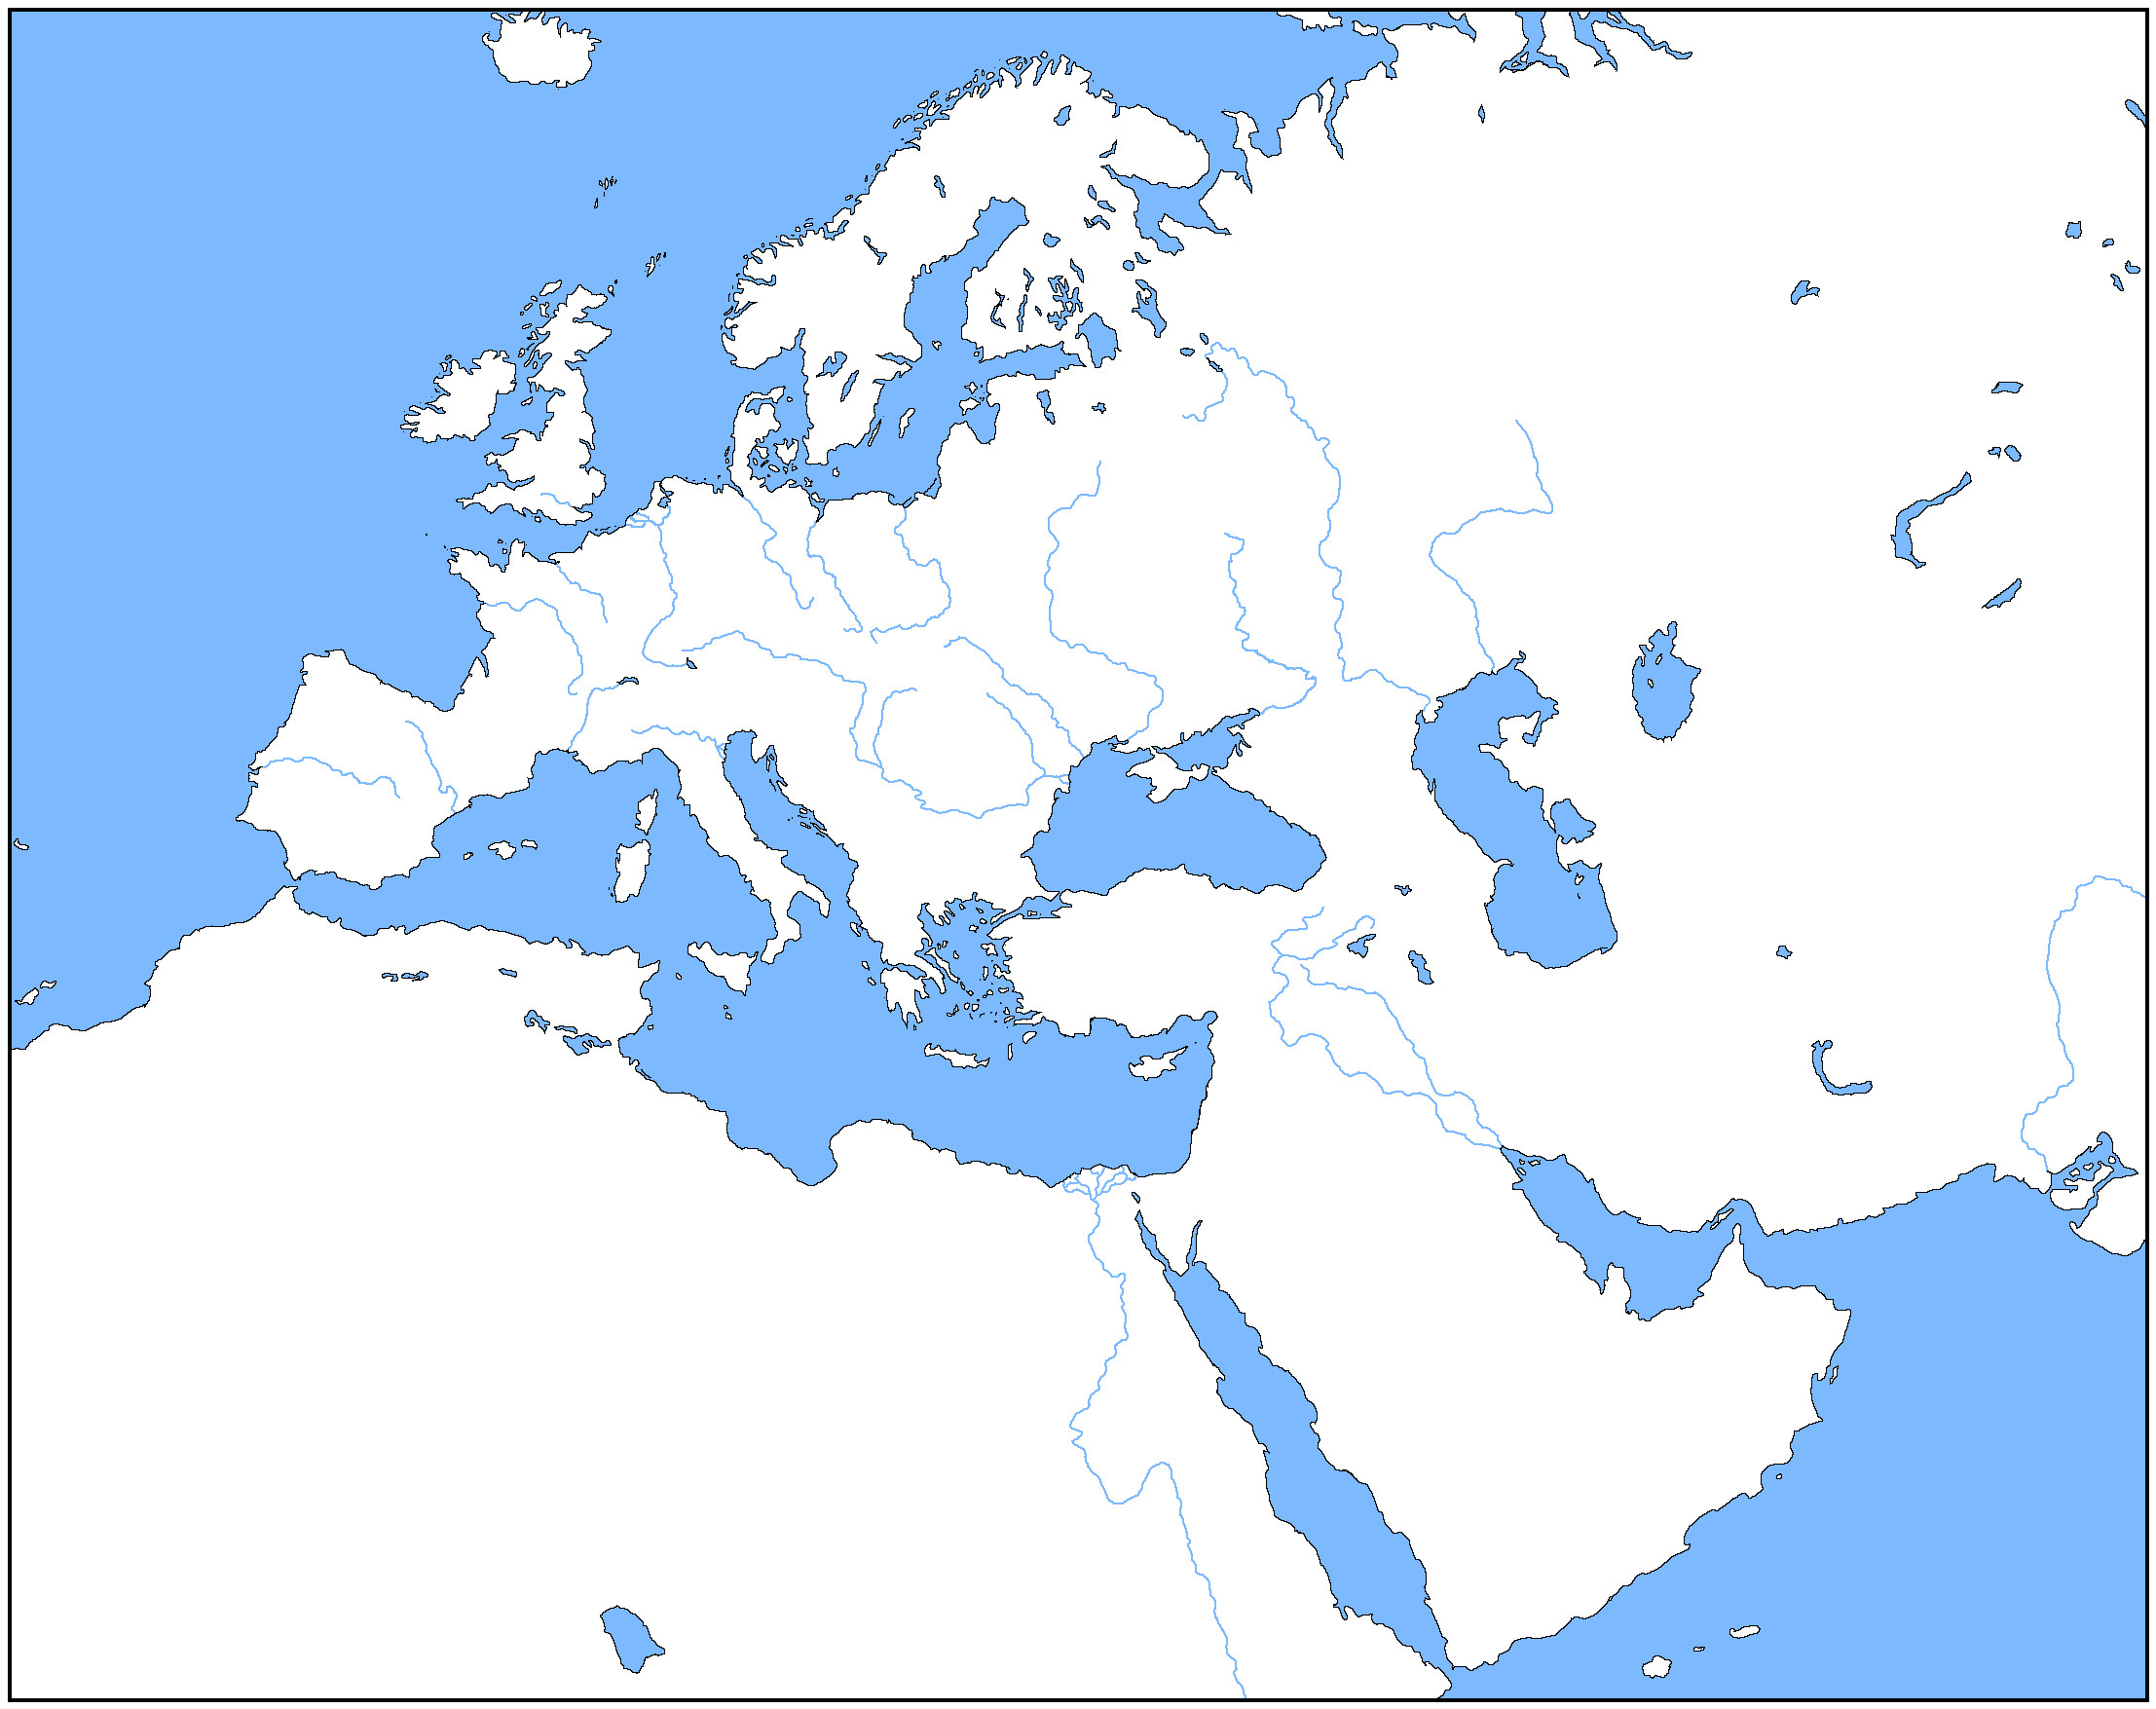 Large Map Of Europe Printable | Sitedesignco - Large Map Of Europe Printable